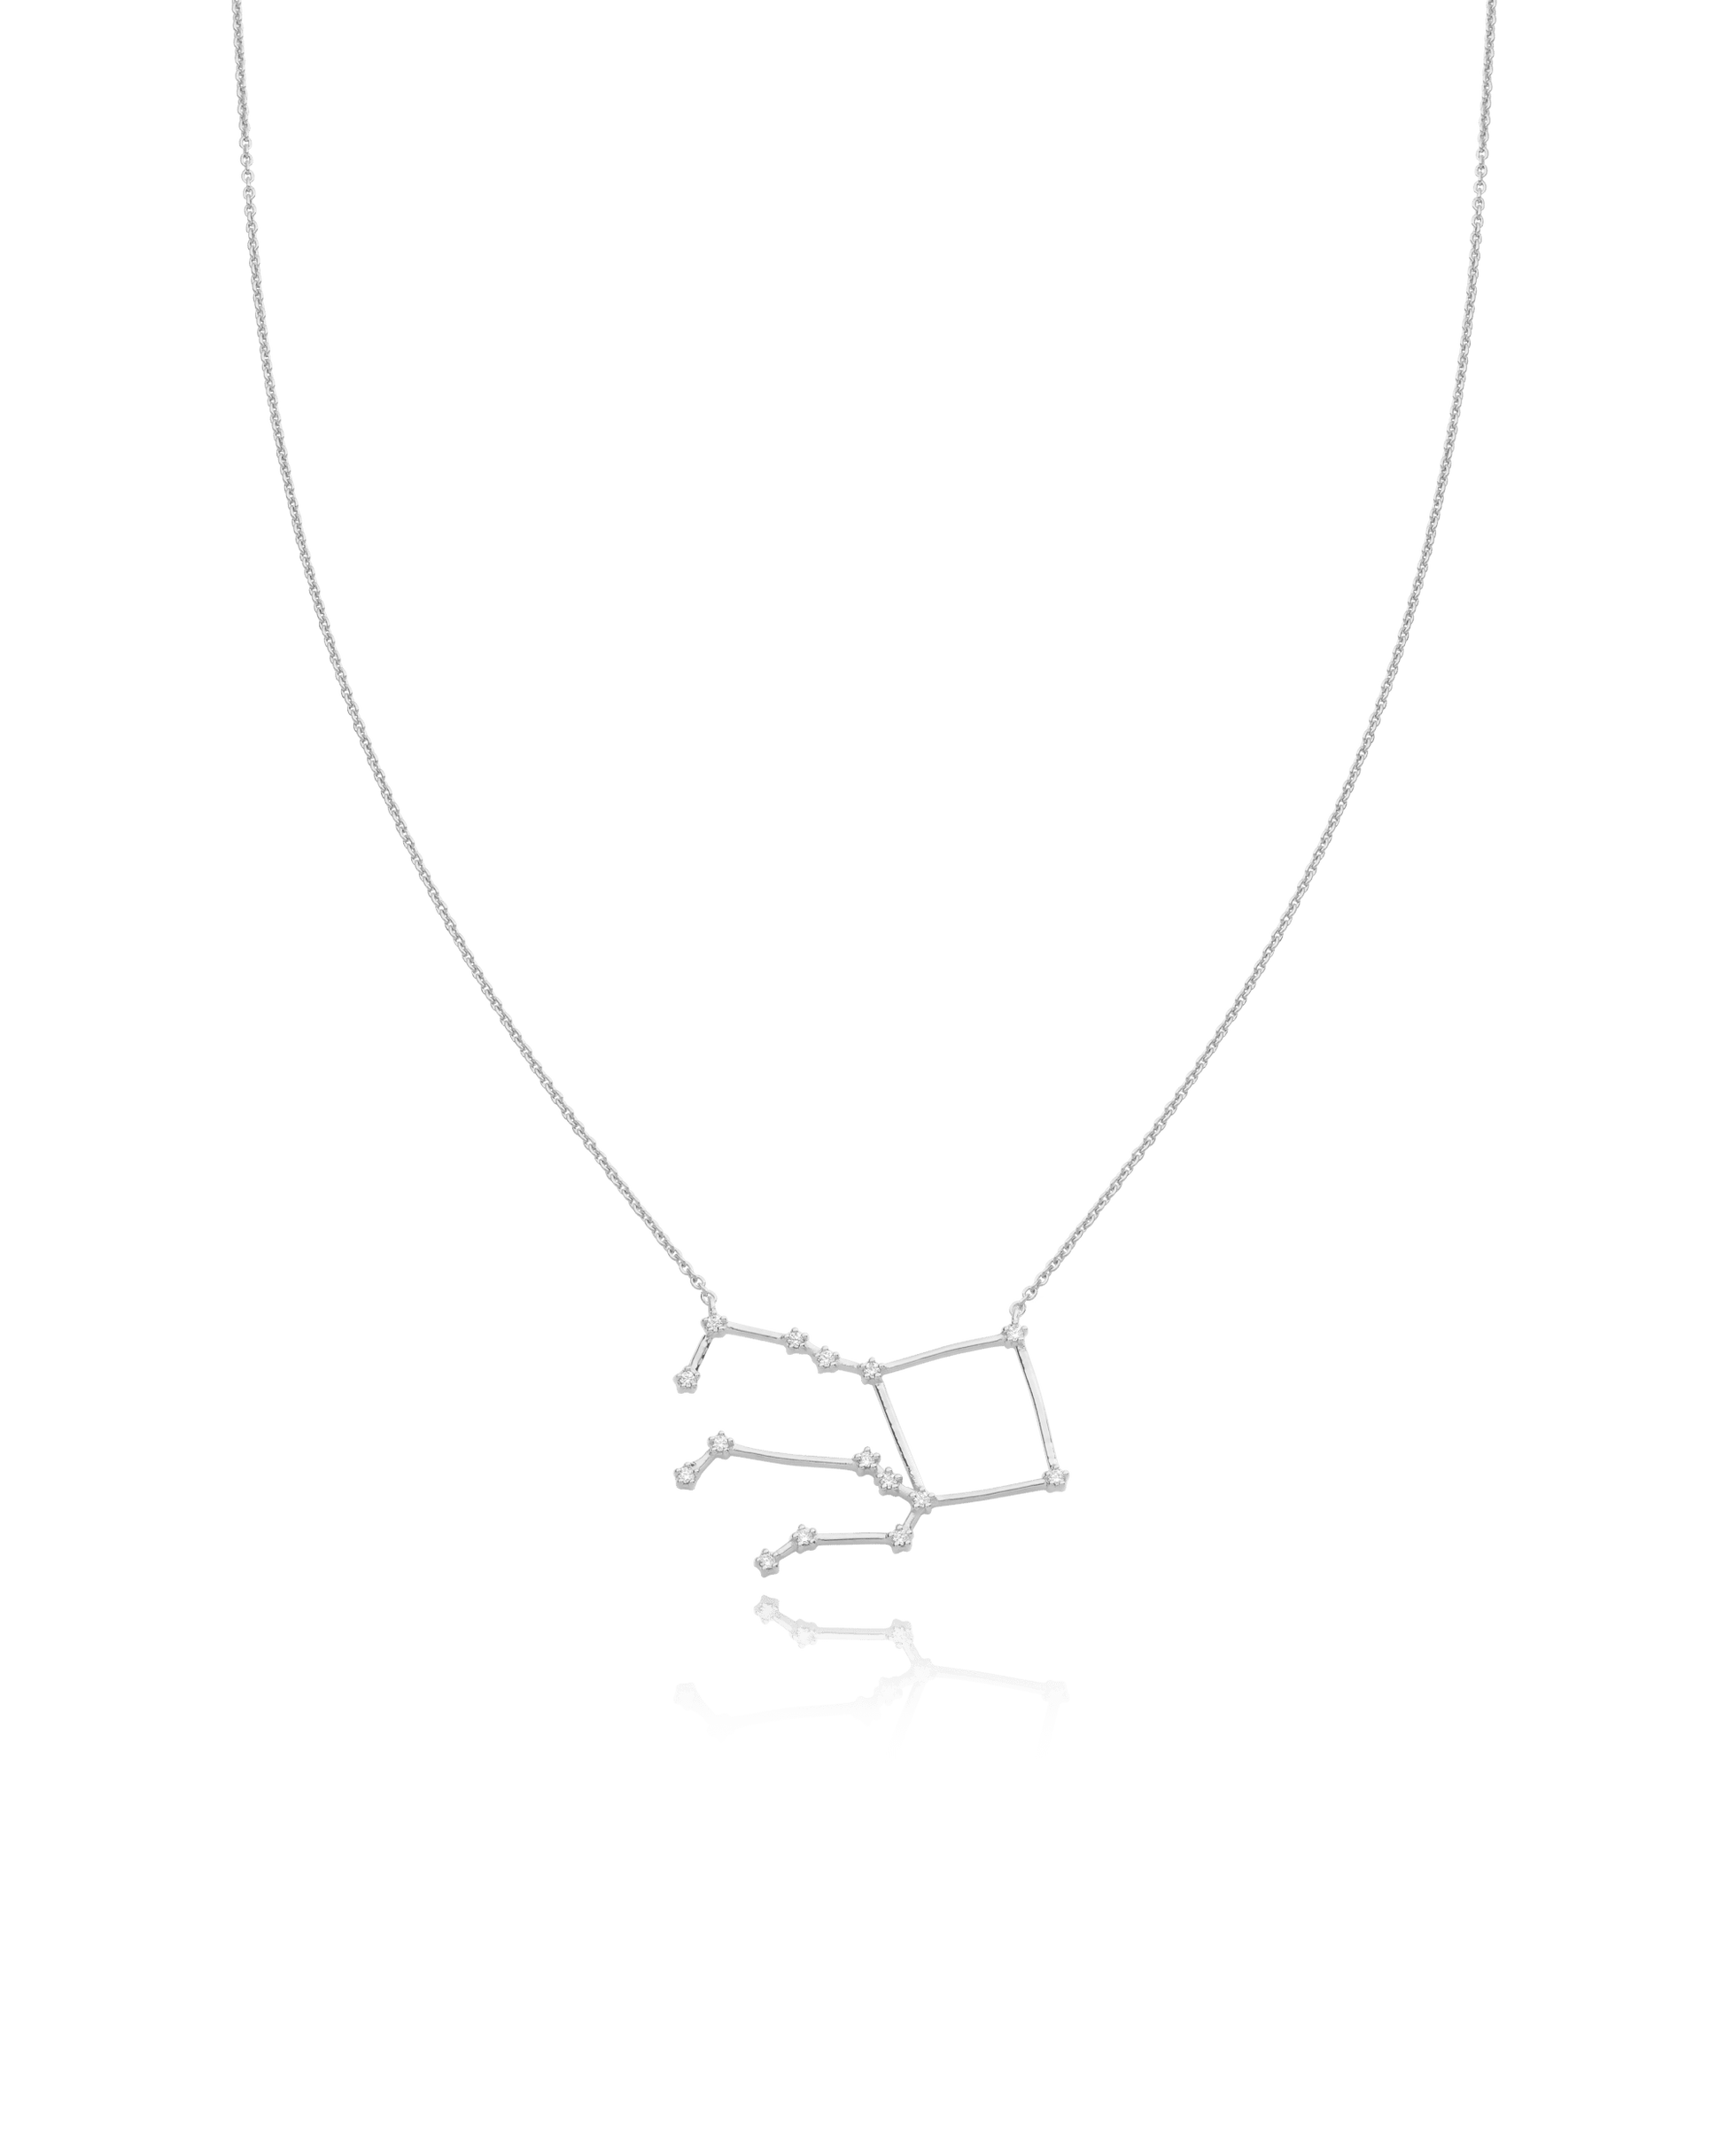 Ursa Major Constellation Necklace - 925 Sterling Silver Necklaces magal-dev Pegasus 16" 